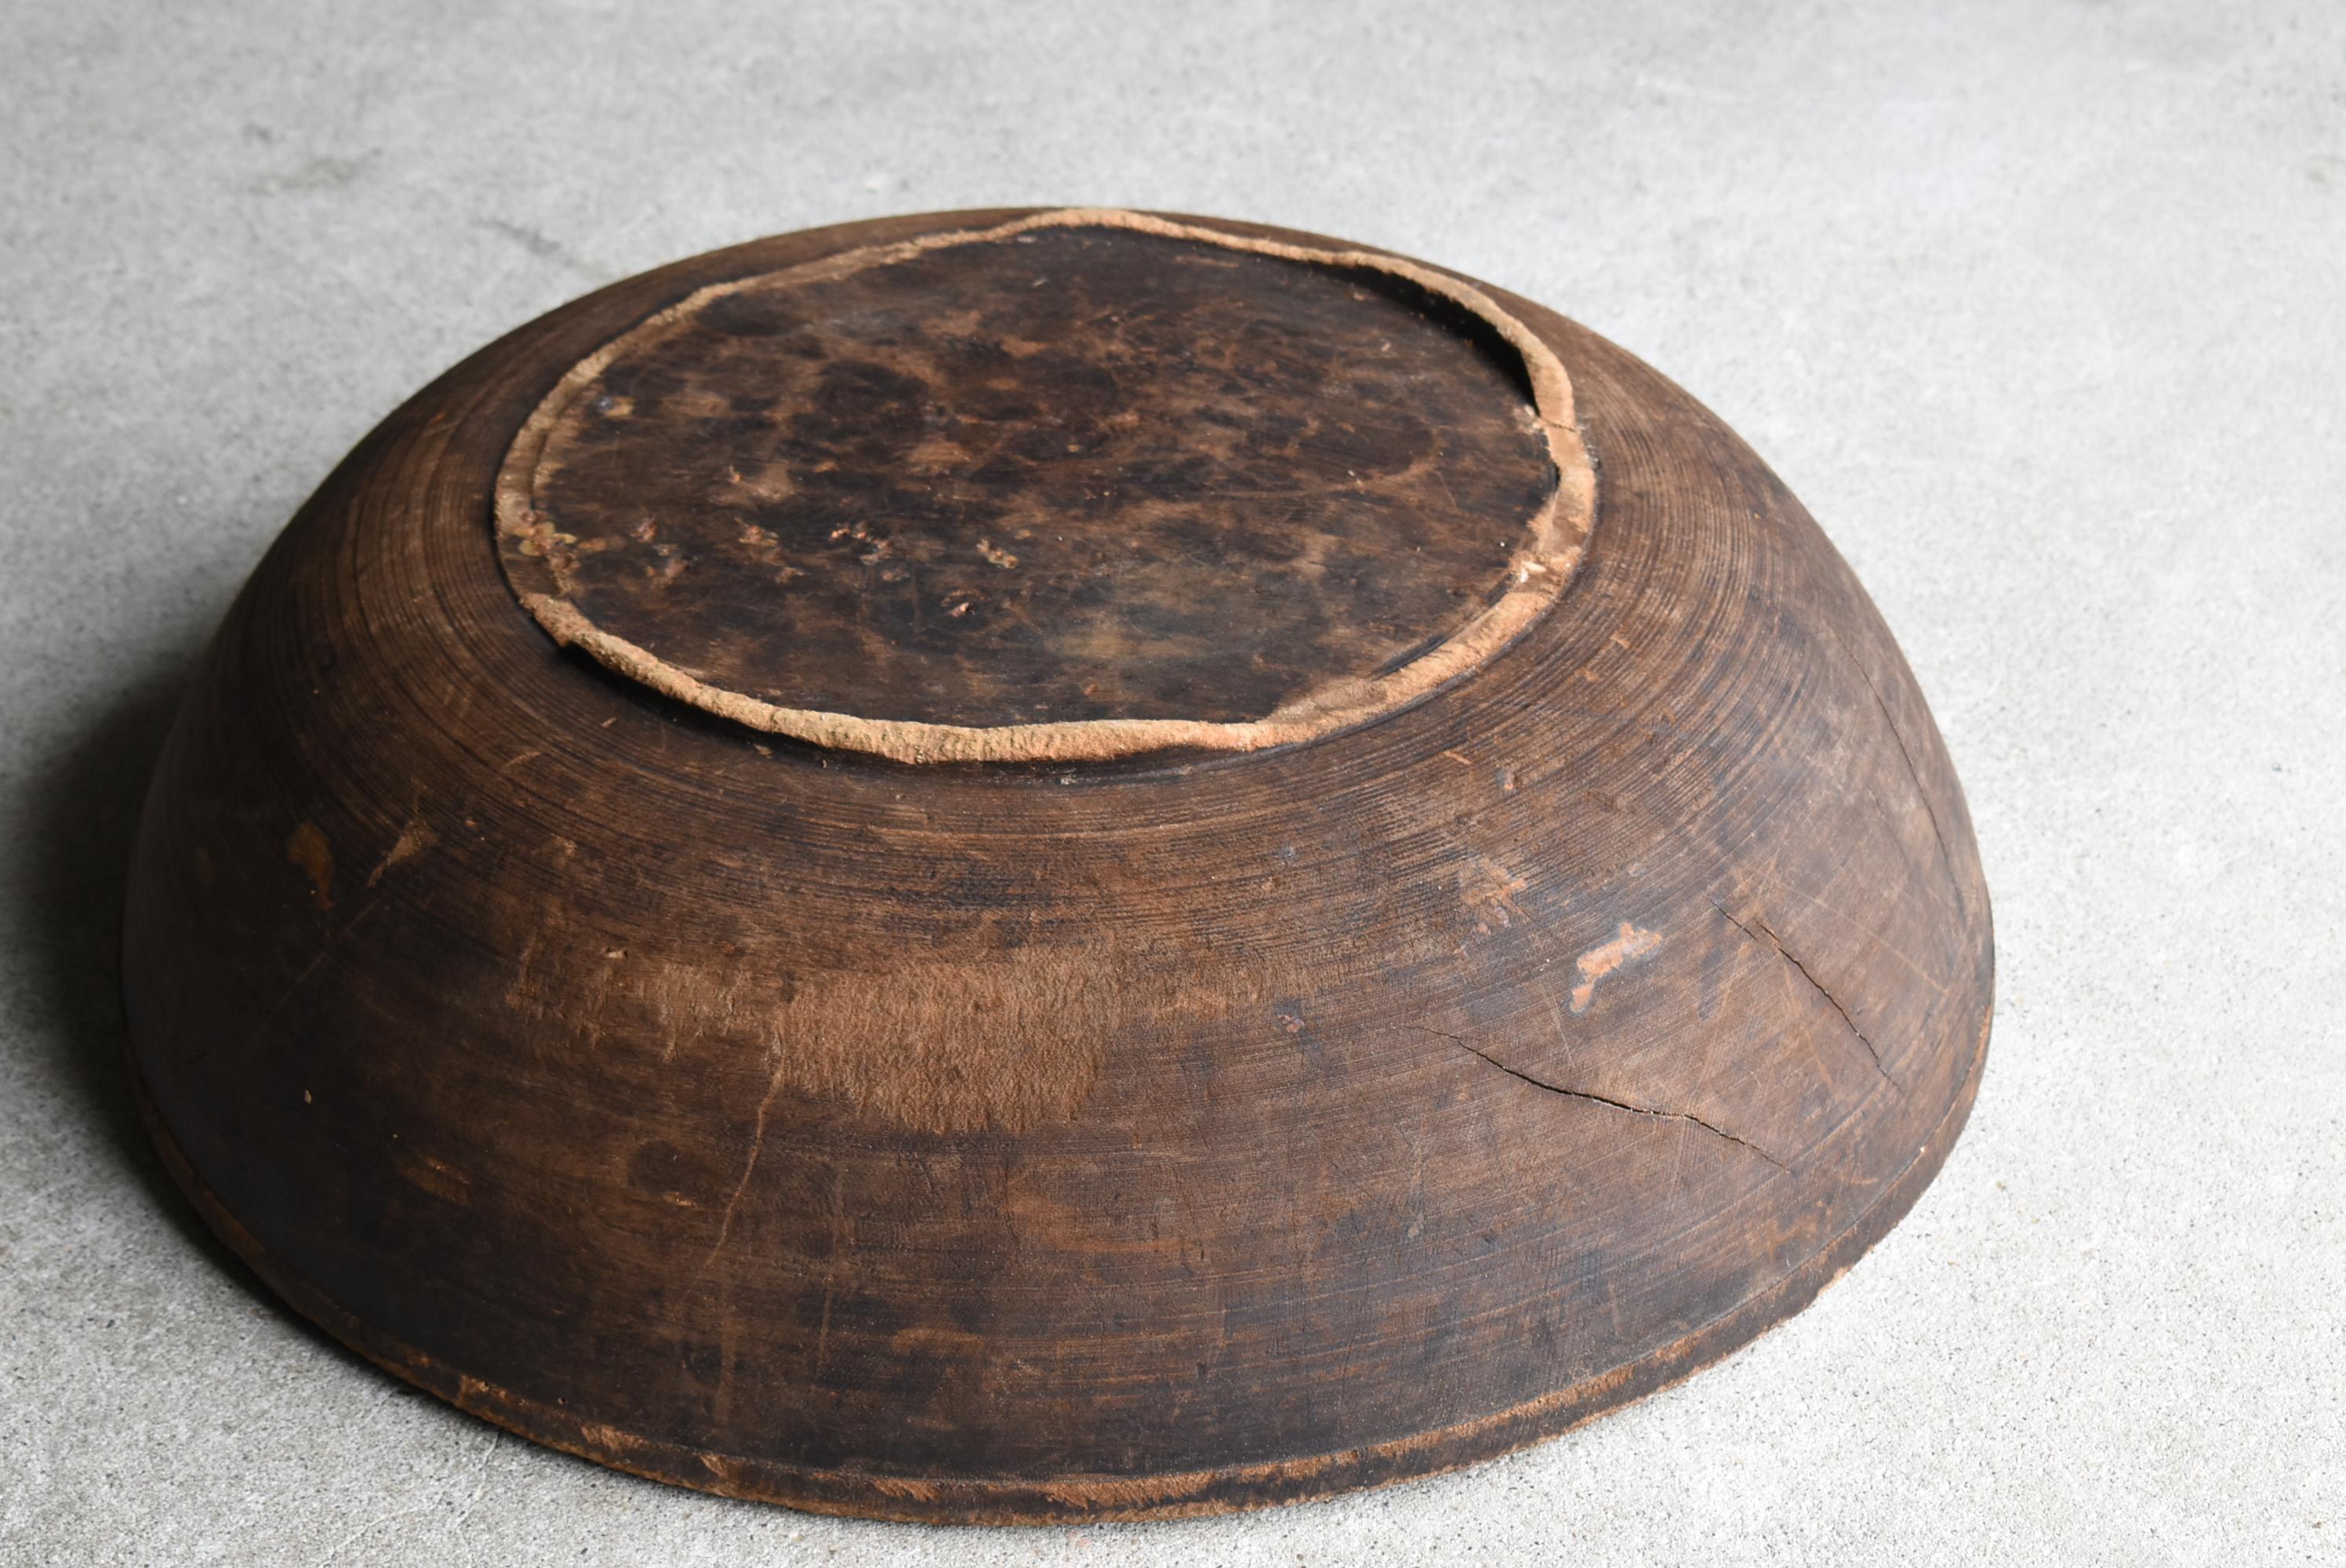 20th Century Japanese Antique Large Wooden Bowl 1860s-1900s/Mingei Wabisabi Primitive